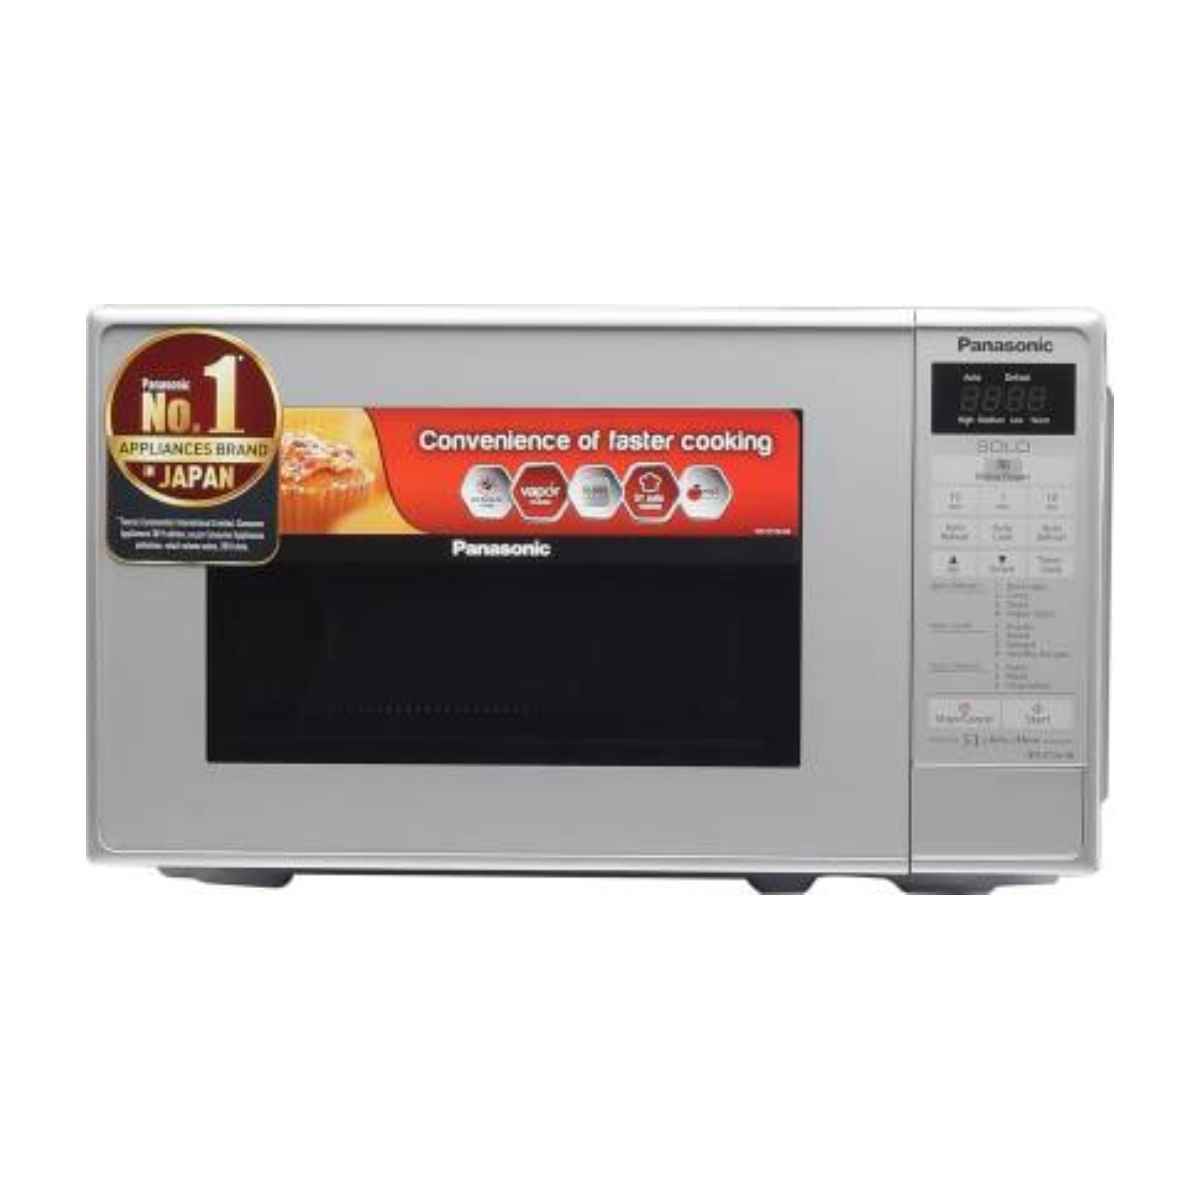 पॅनासॉनिक 20 L Solo Microwave Oven (NN-ST26JMFDG) 